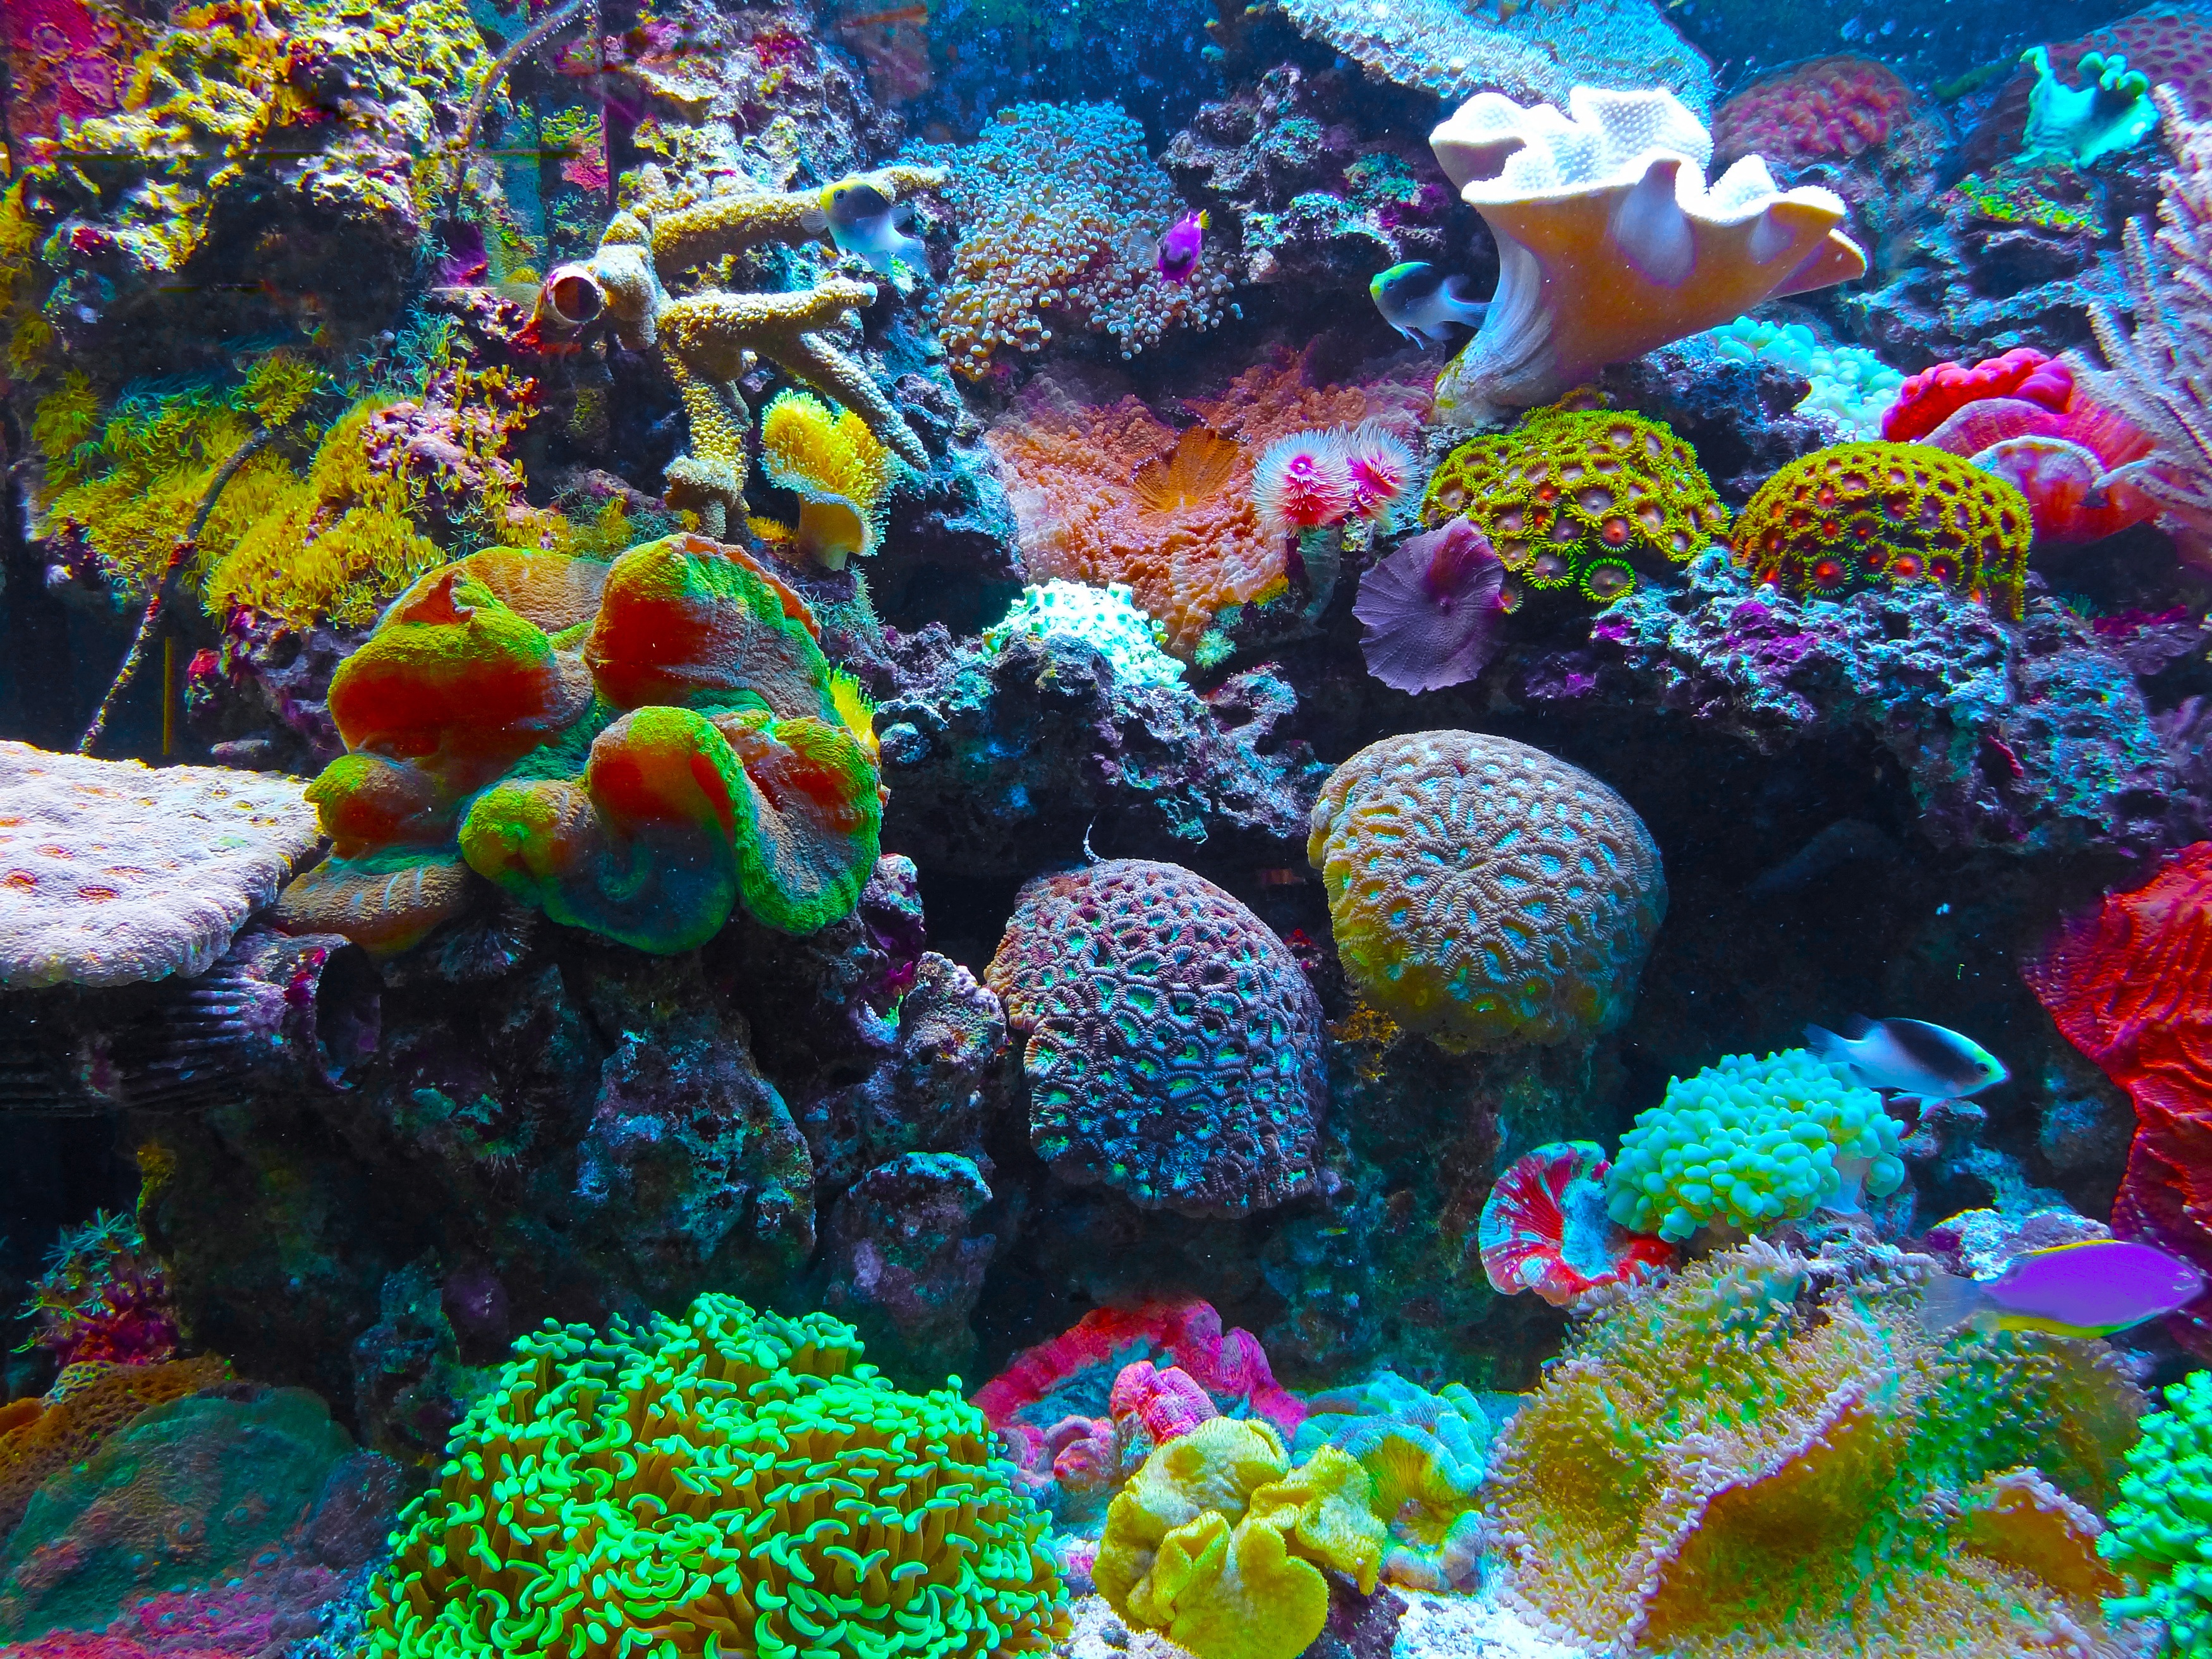 Фото море биология кораллы - бесплатные картинки на Fonwall